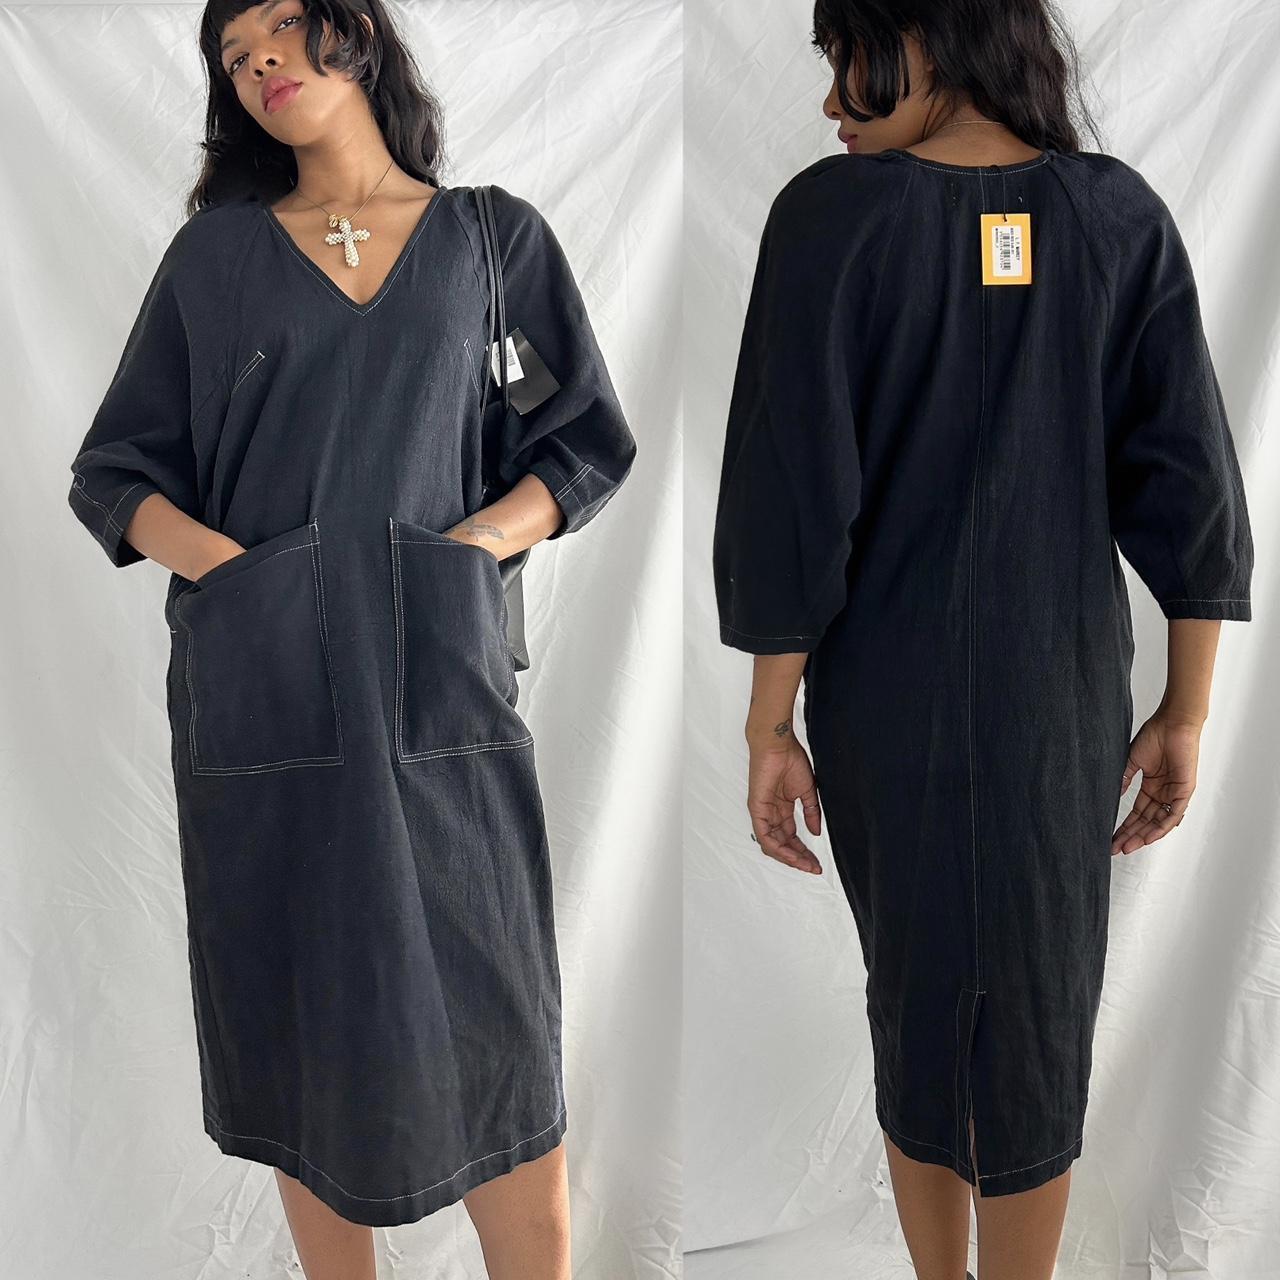 LF Markey  Women's Black Dress (3)